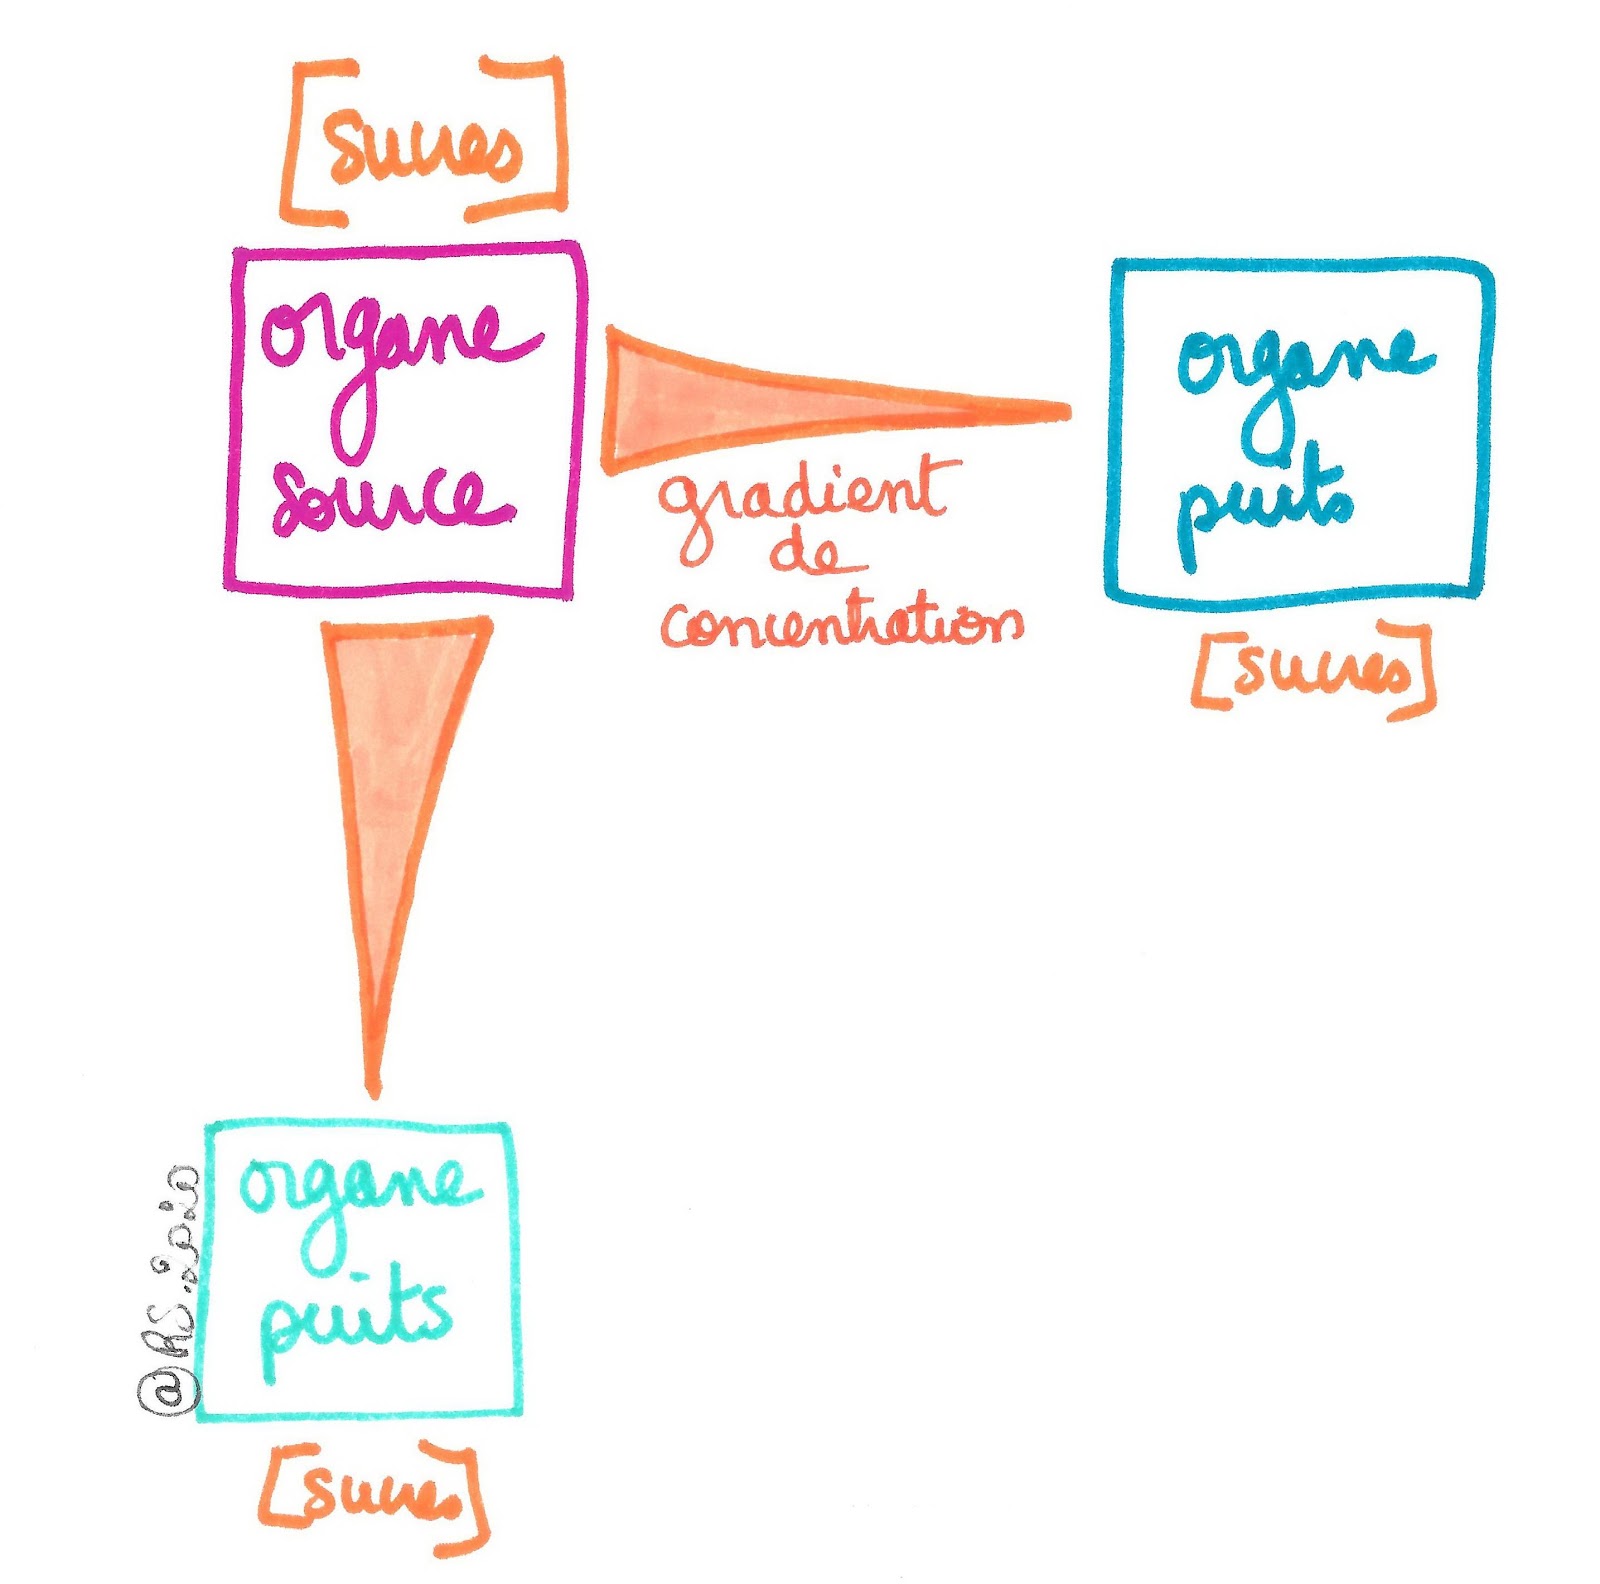 <b>Mécanisme de circulation de matière entre organes-sources et organes-puits</b>